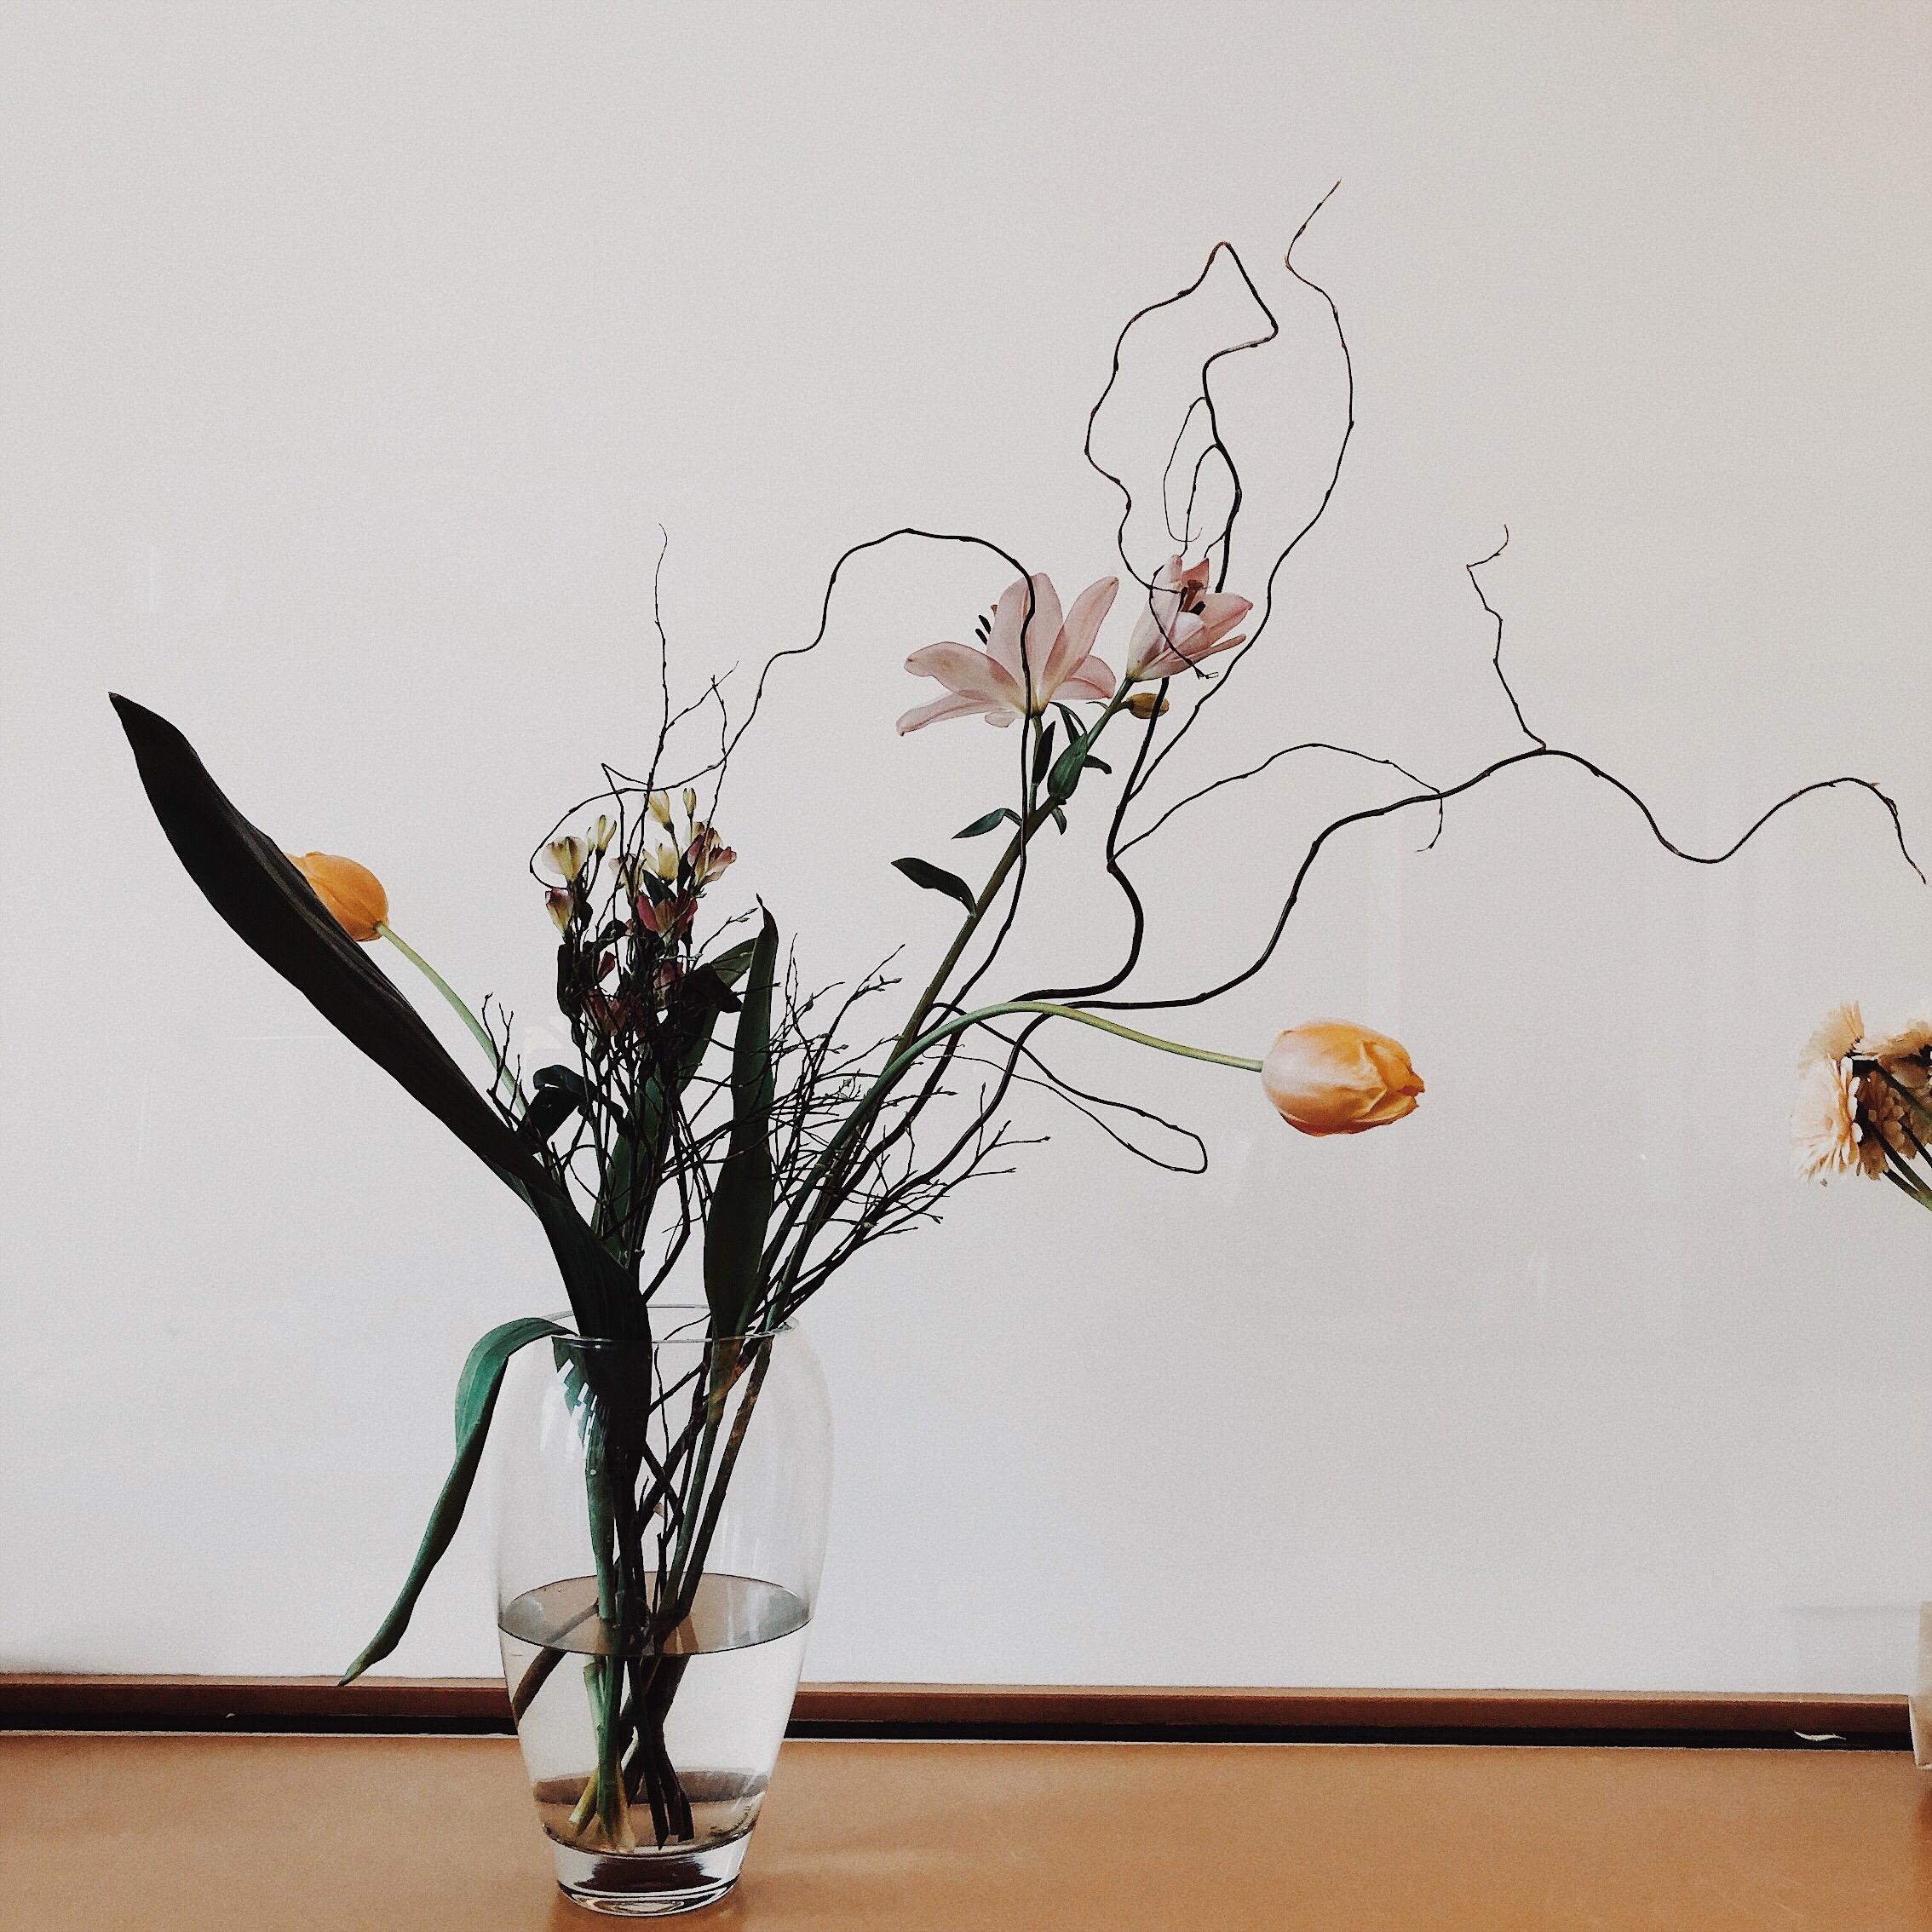 #simplicity #minimalism #vase #dekor #decoration #flowers #design